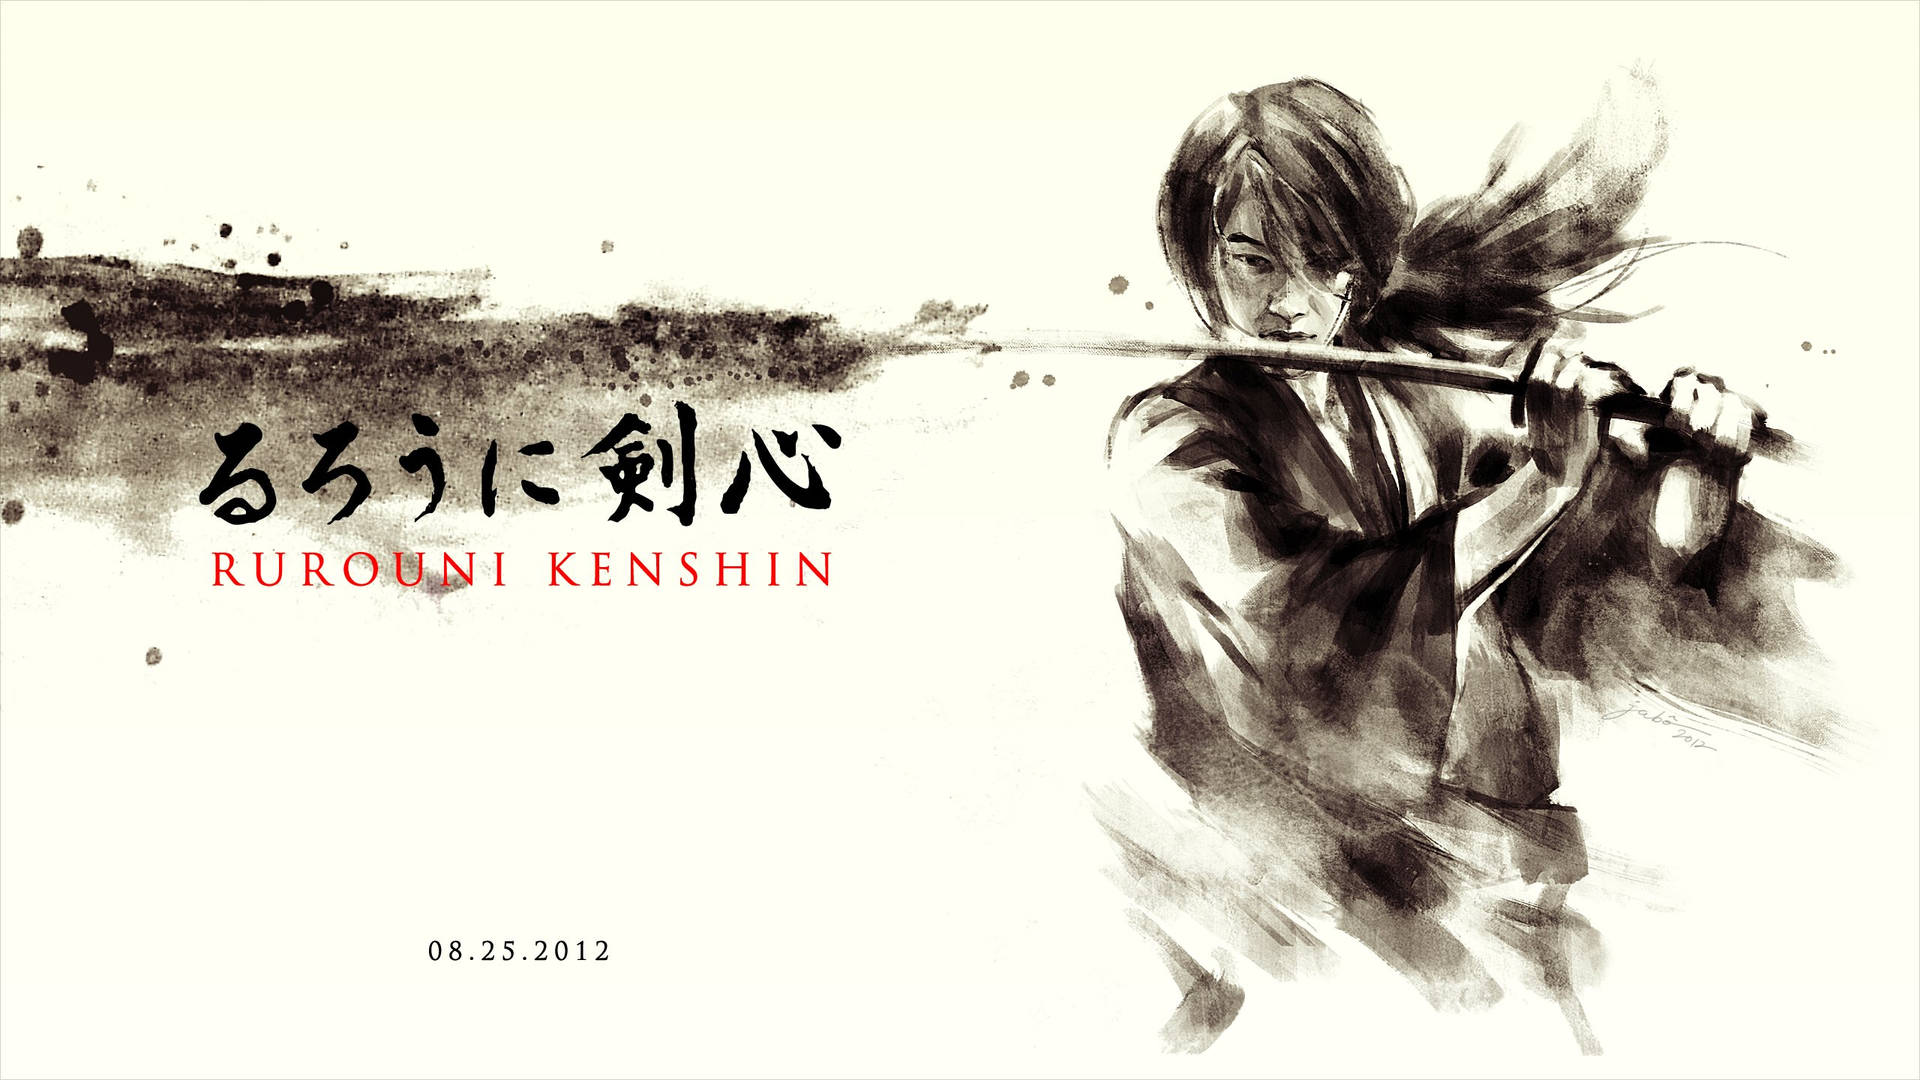 Rurouni Kenshin Poster Art